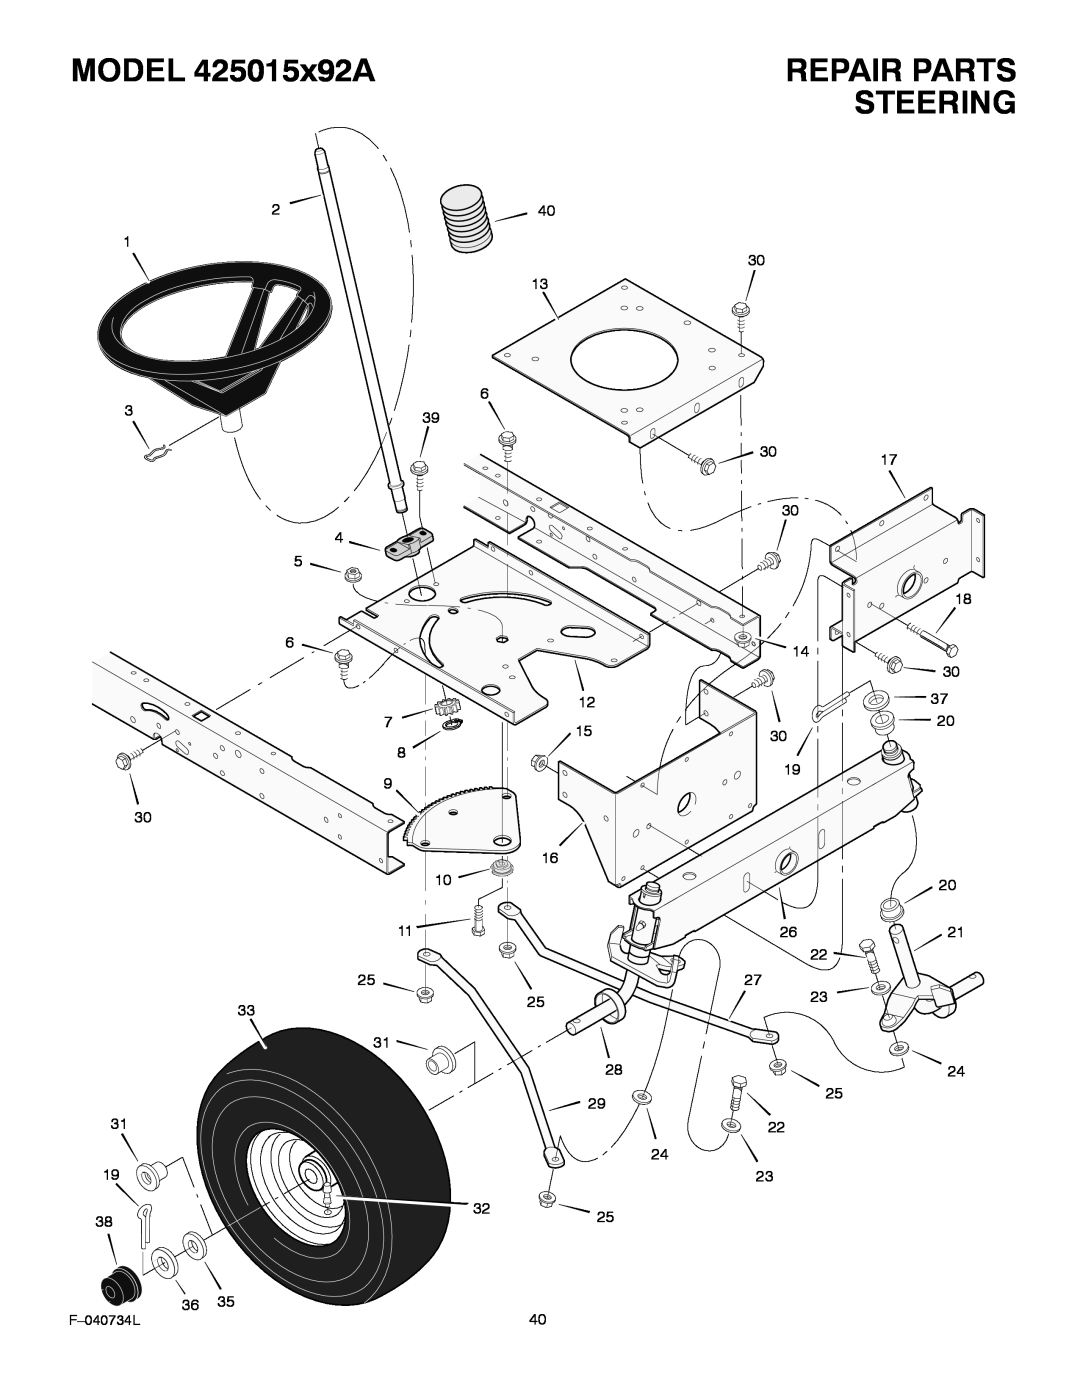 Murray manual Steering, MODEL 425015x92A, Repair Parts, F-040734L 